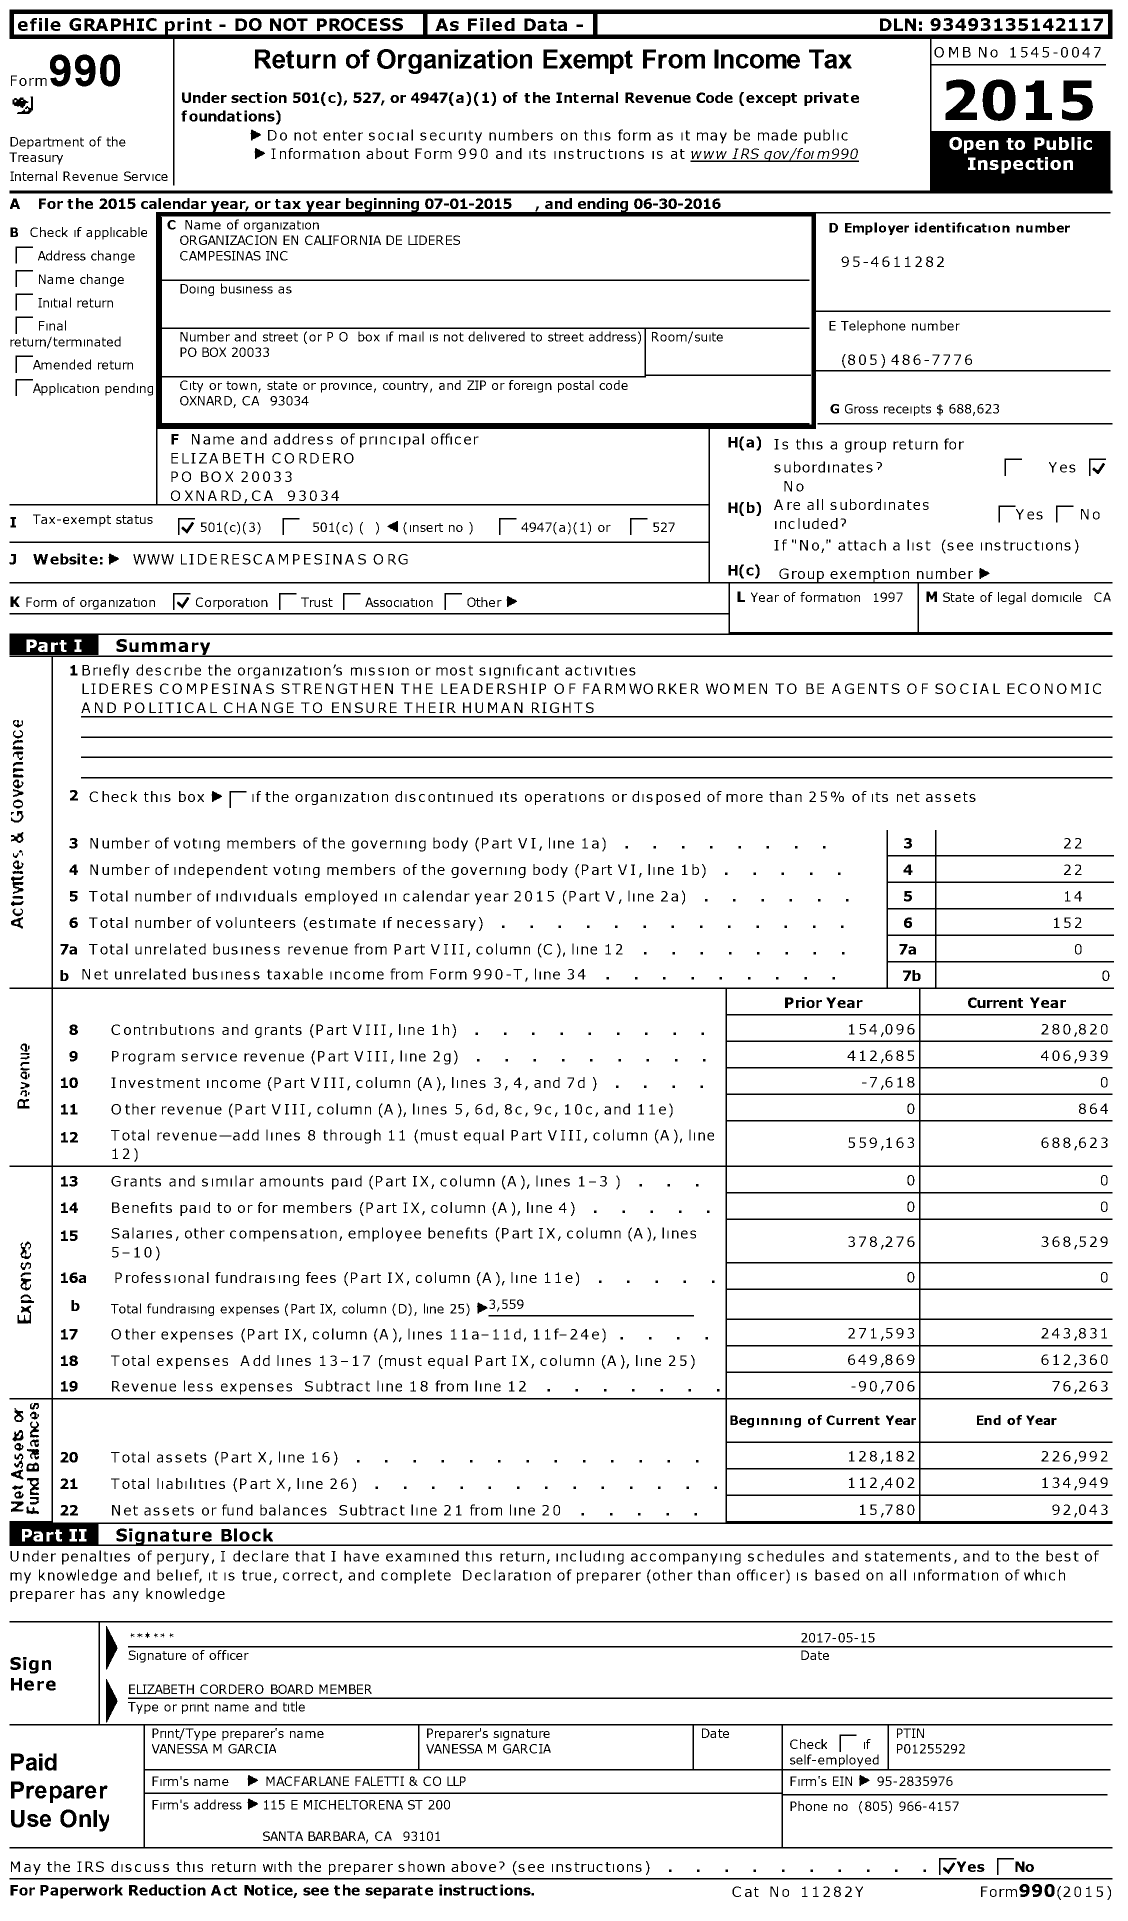 Image of first page of 2015 Form 990 for Organizacion en California de Lideres Campesinas